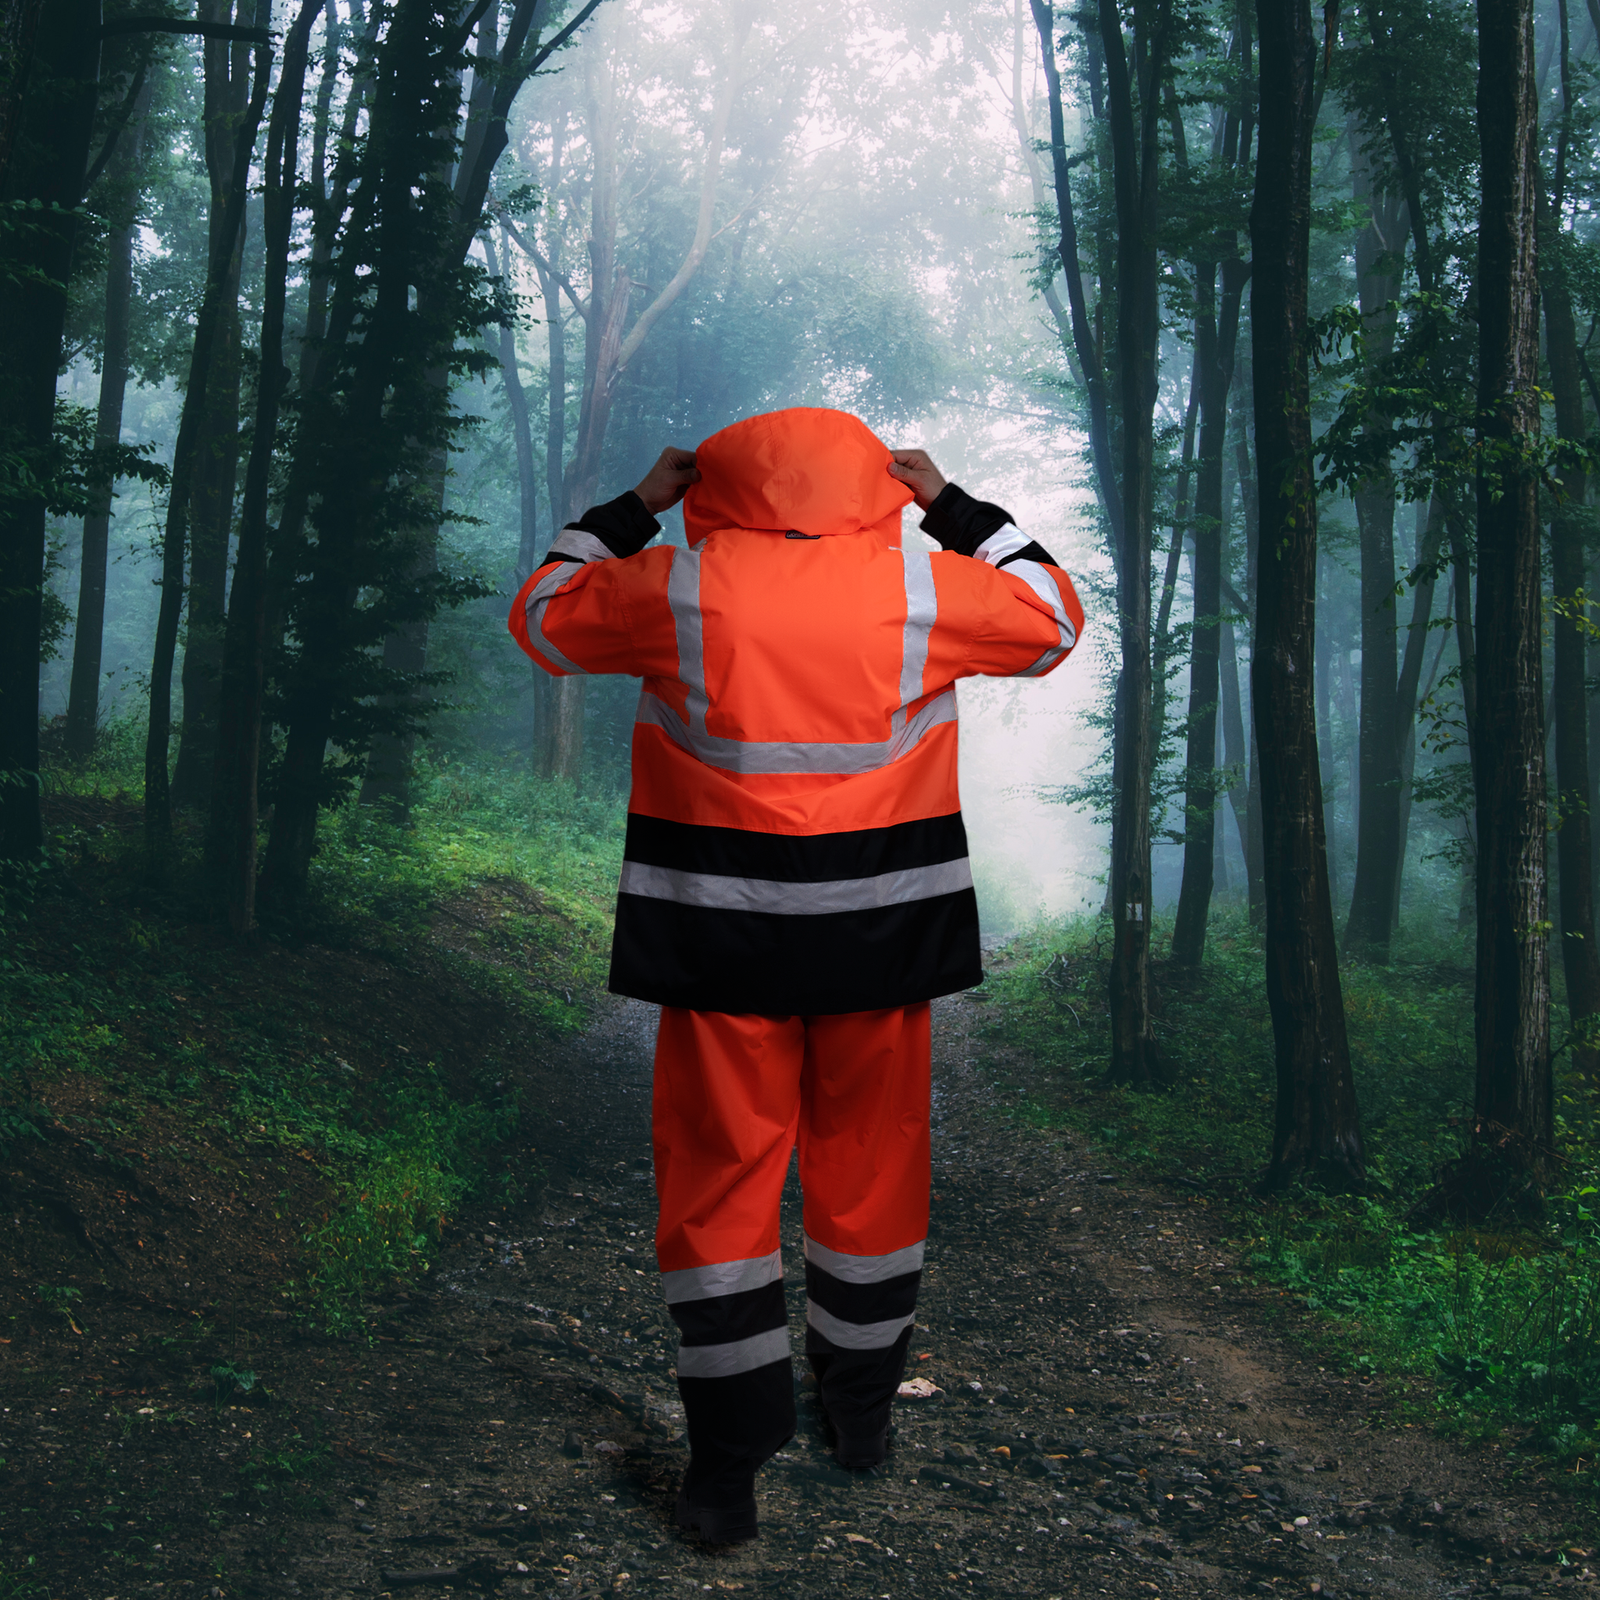 Worker using the Hi Vis Orange Safety Rain Set pant and jacket